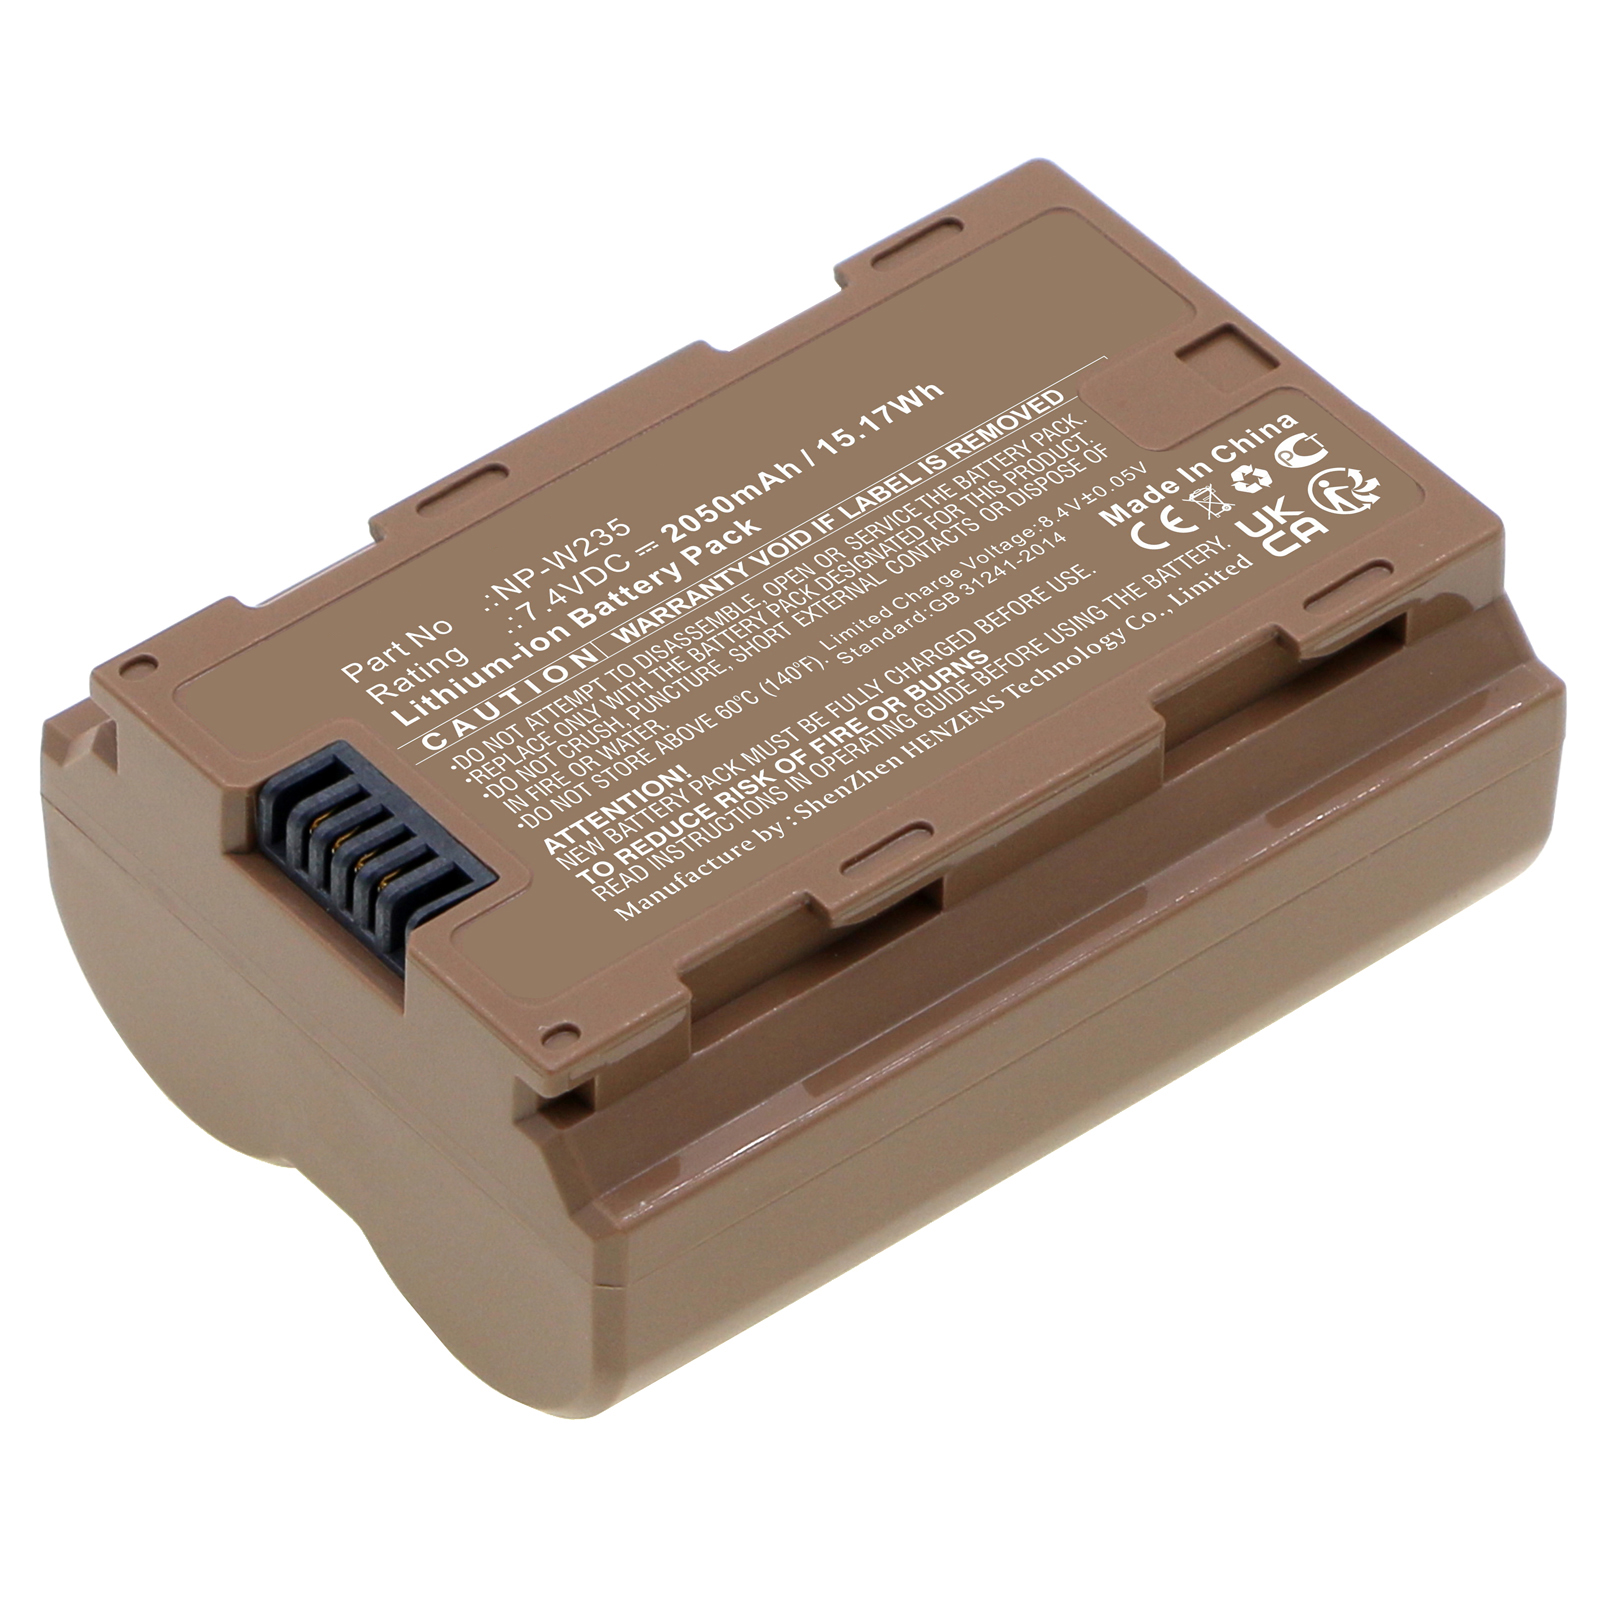 Synergy Digital Digital Camera Battery, Compatible with Fujifilm NP-W235 Digital Camera Battery (Li-ion, 7.4V, 2050mAh) - Built-In USB-C Charging Feature